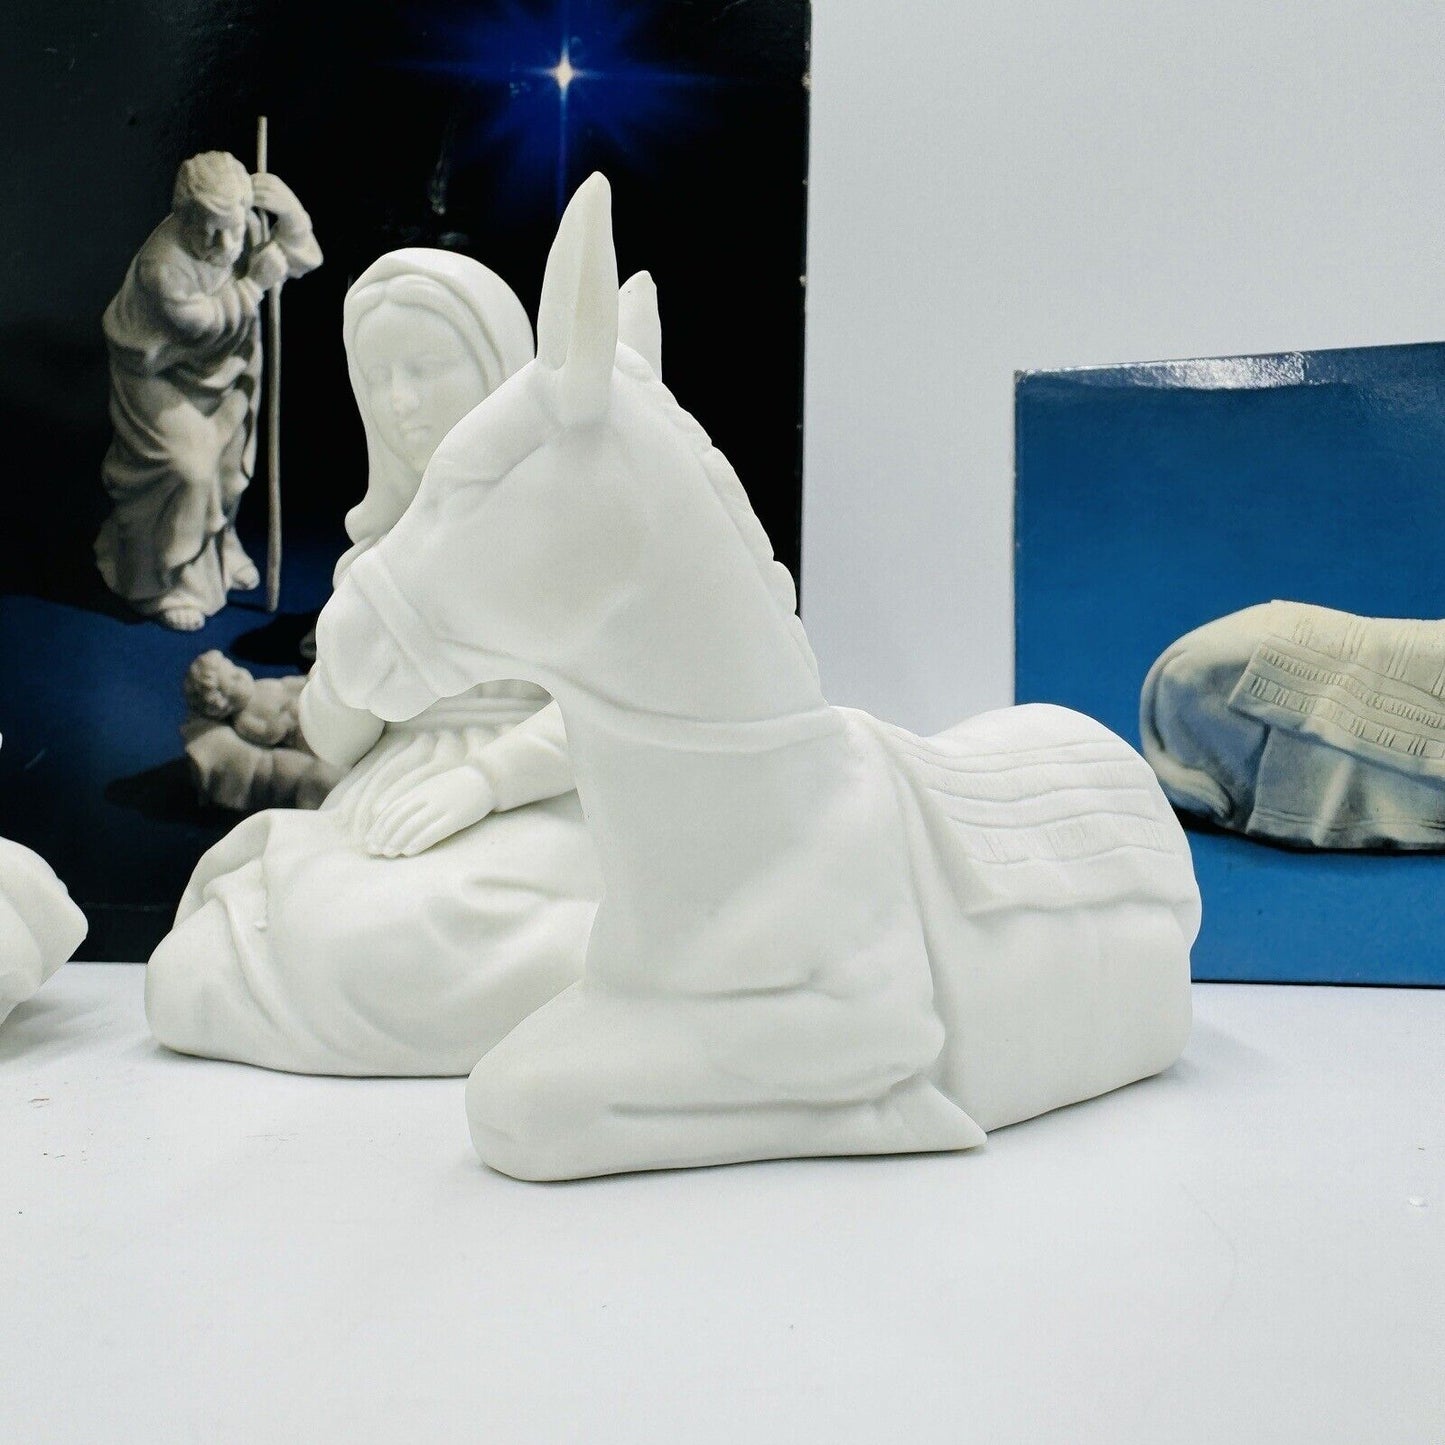 Vintage Avon Nativity Collectibles White Bisque Porcelain 5 Piece Figurines 1987